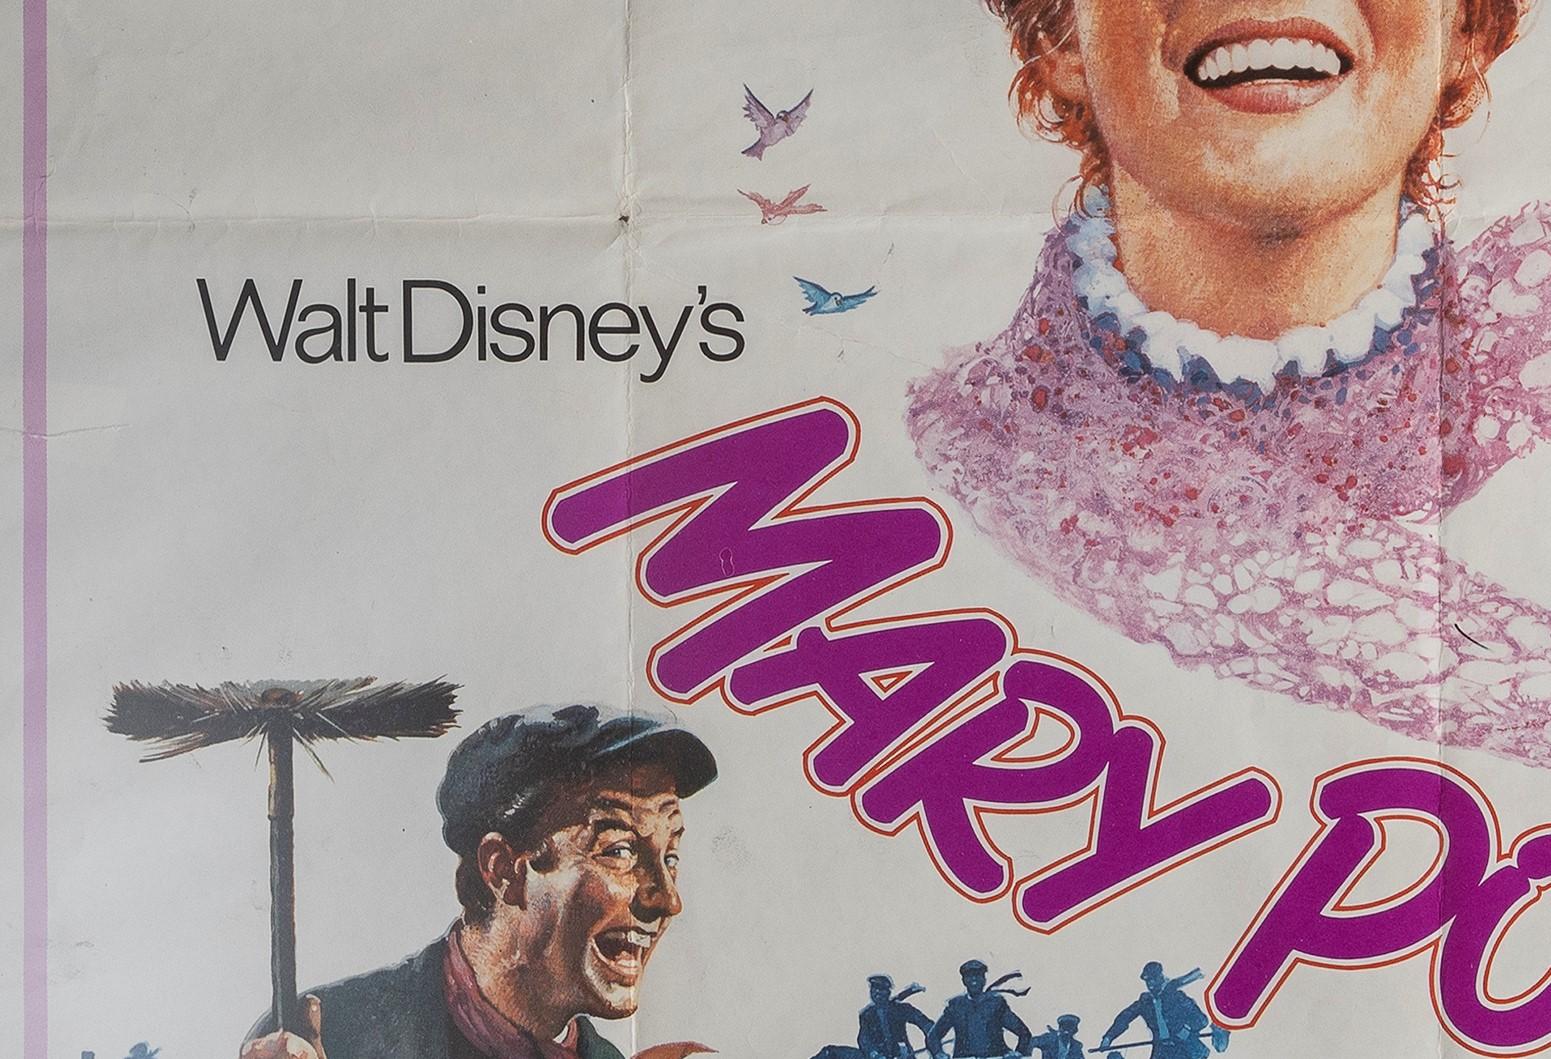 Acrylic Mary Poppins Film, 1970s Original British Cinema Movie Poster Framed For Sale